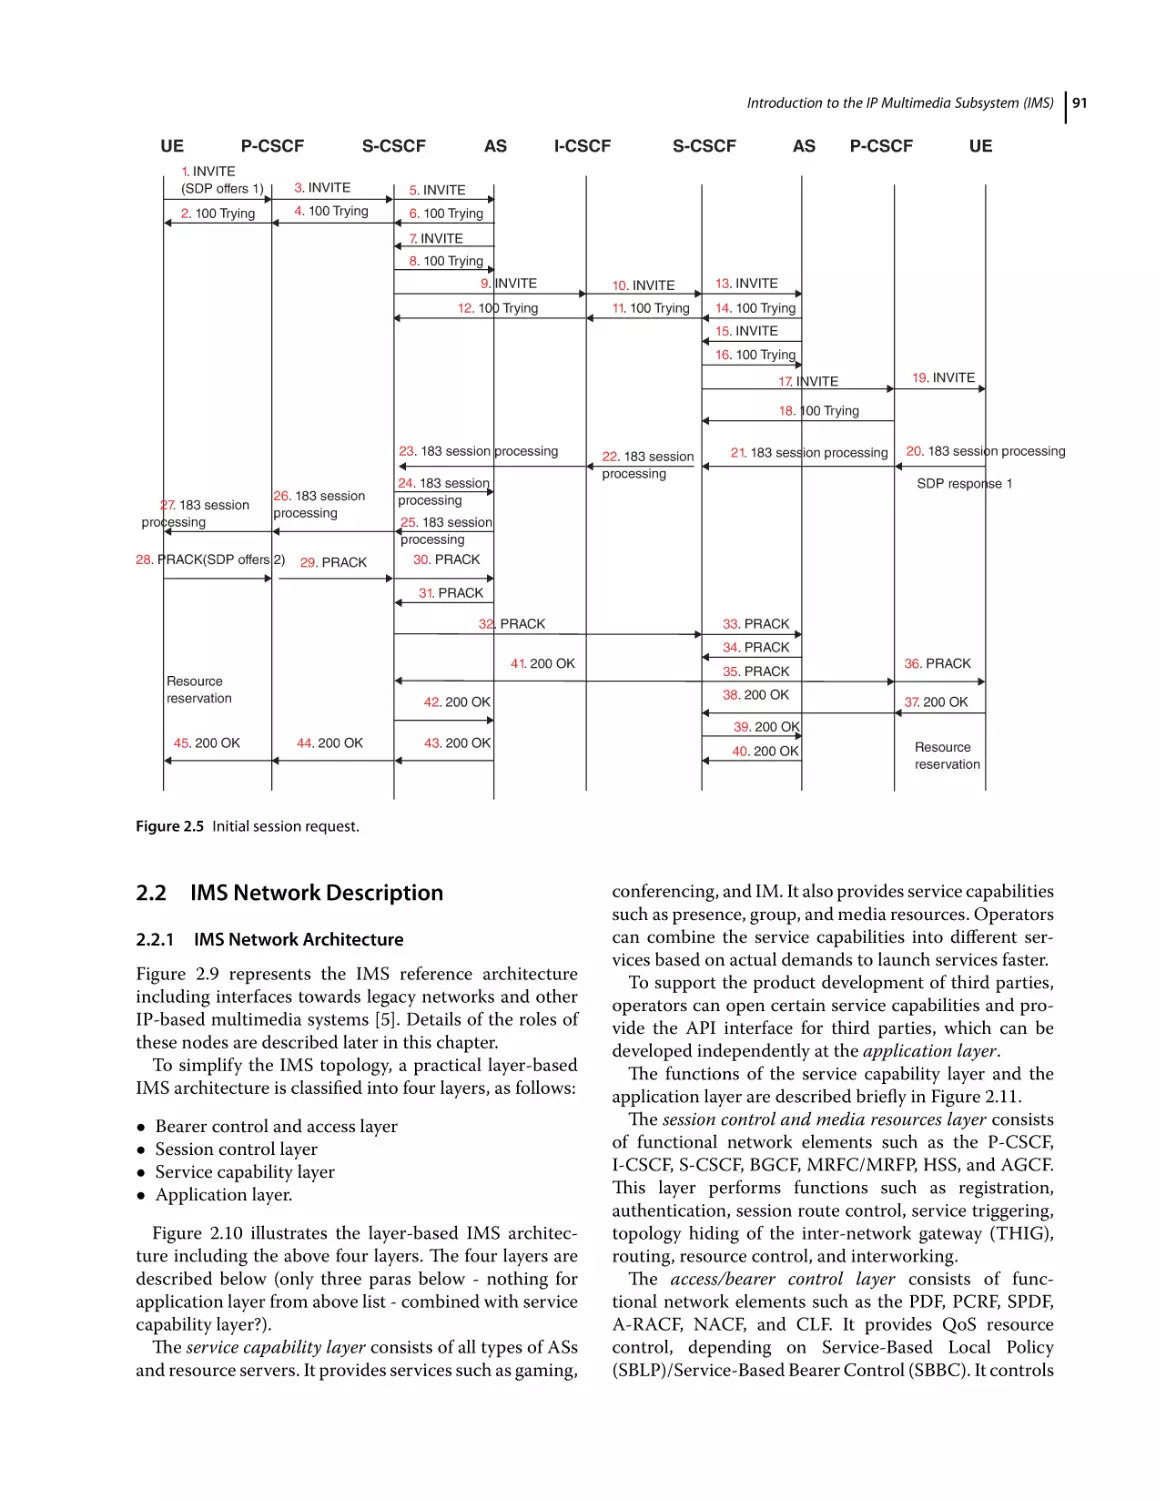 2.2 IMS Network Description
2.2.1 IMS Network Architecture